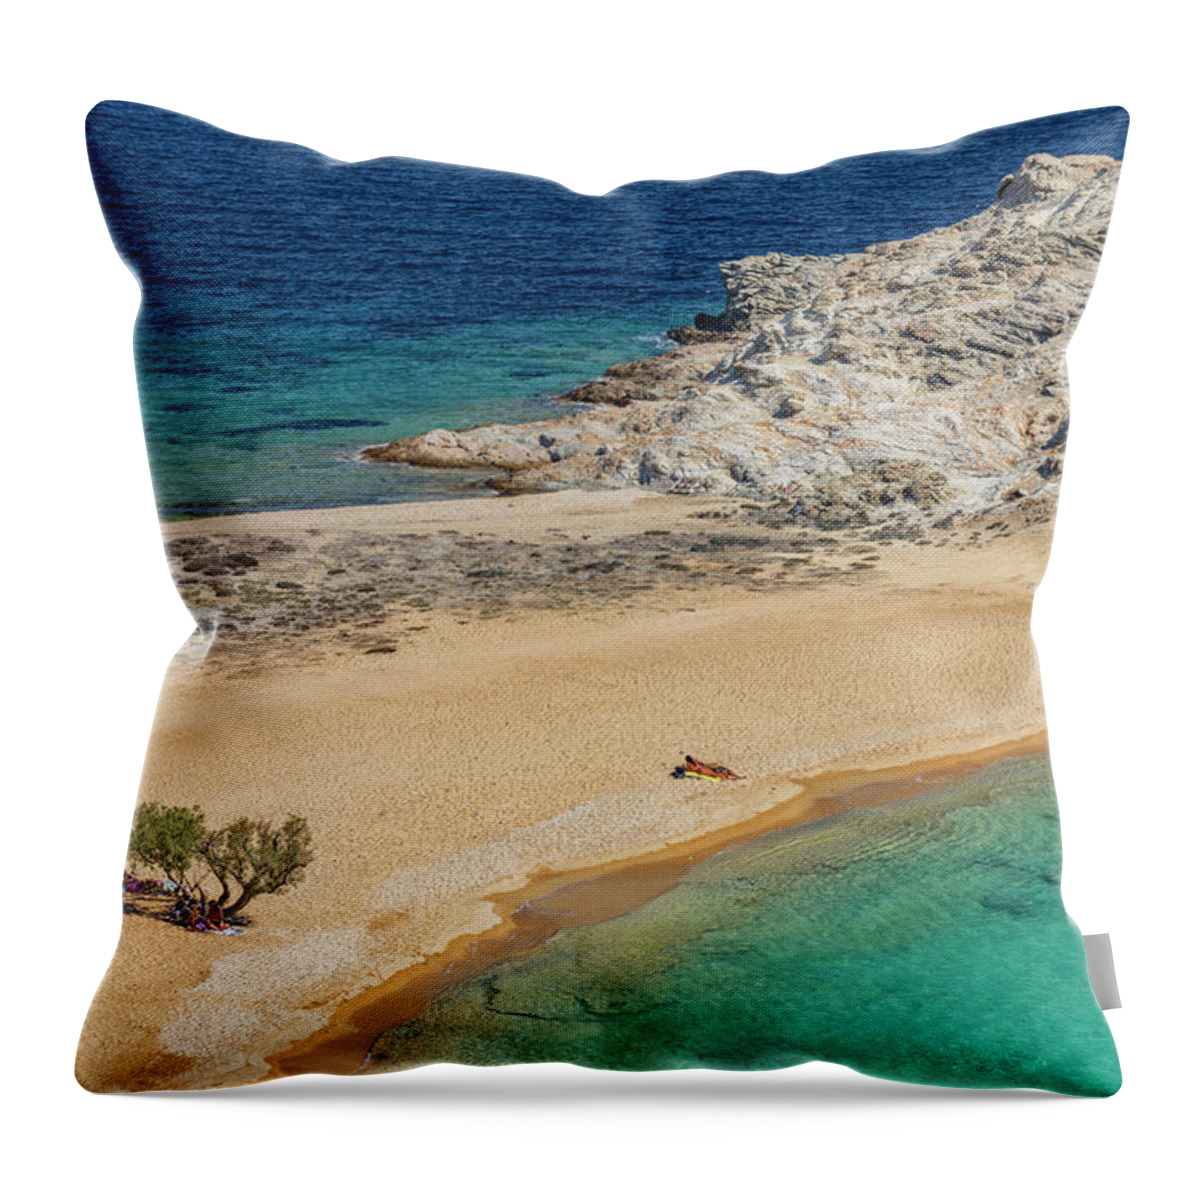 Estock Throw Pillow featuring the digital art Greece, Cyclades, Serifos Island by Massimo Ripani